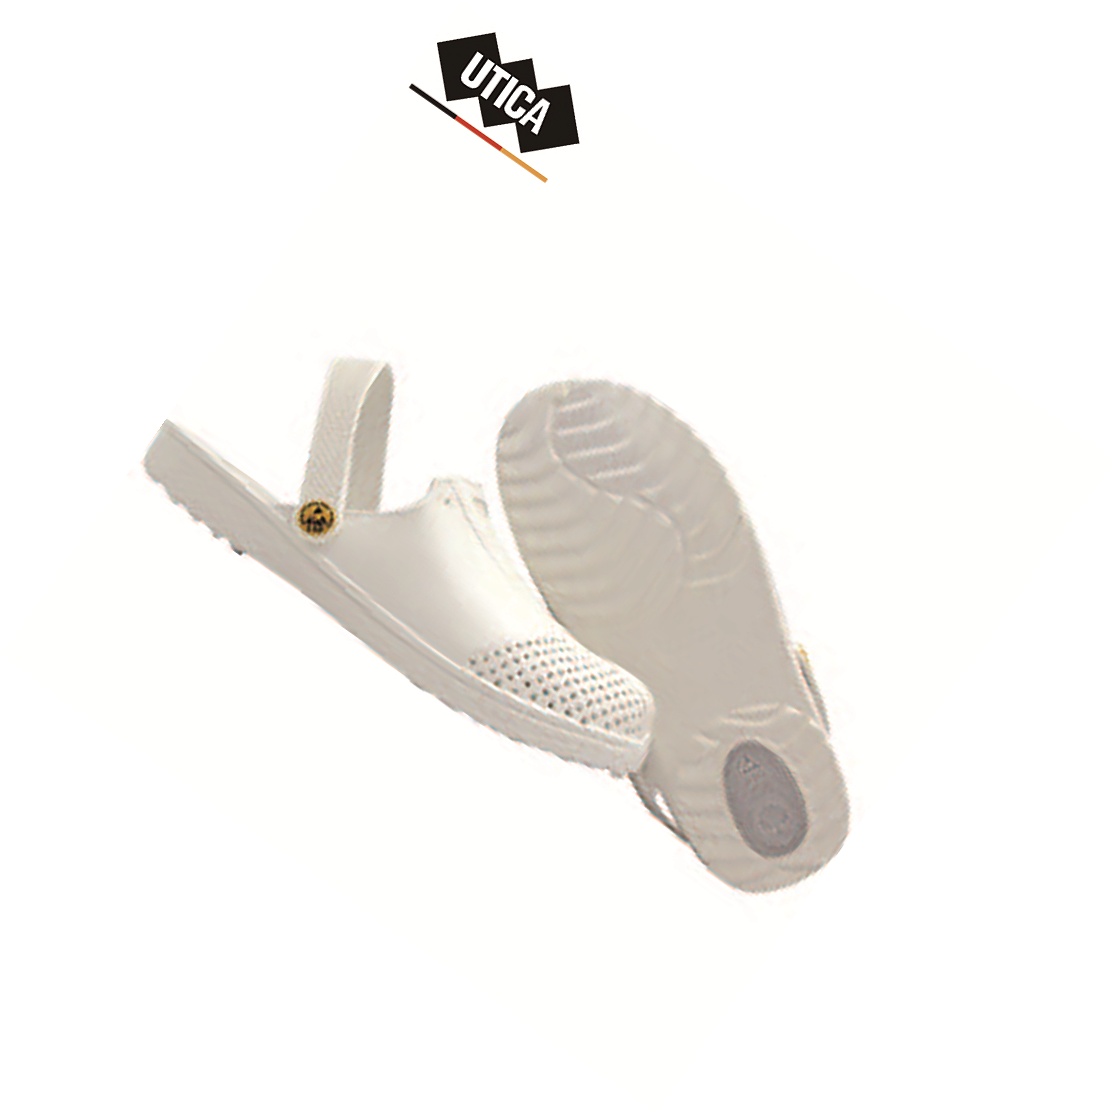 UTICA 防静电橡塑凉鞋 白色 GE80-504-280